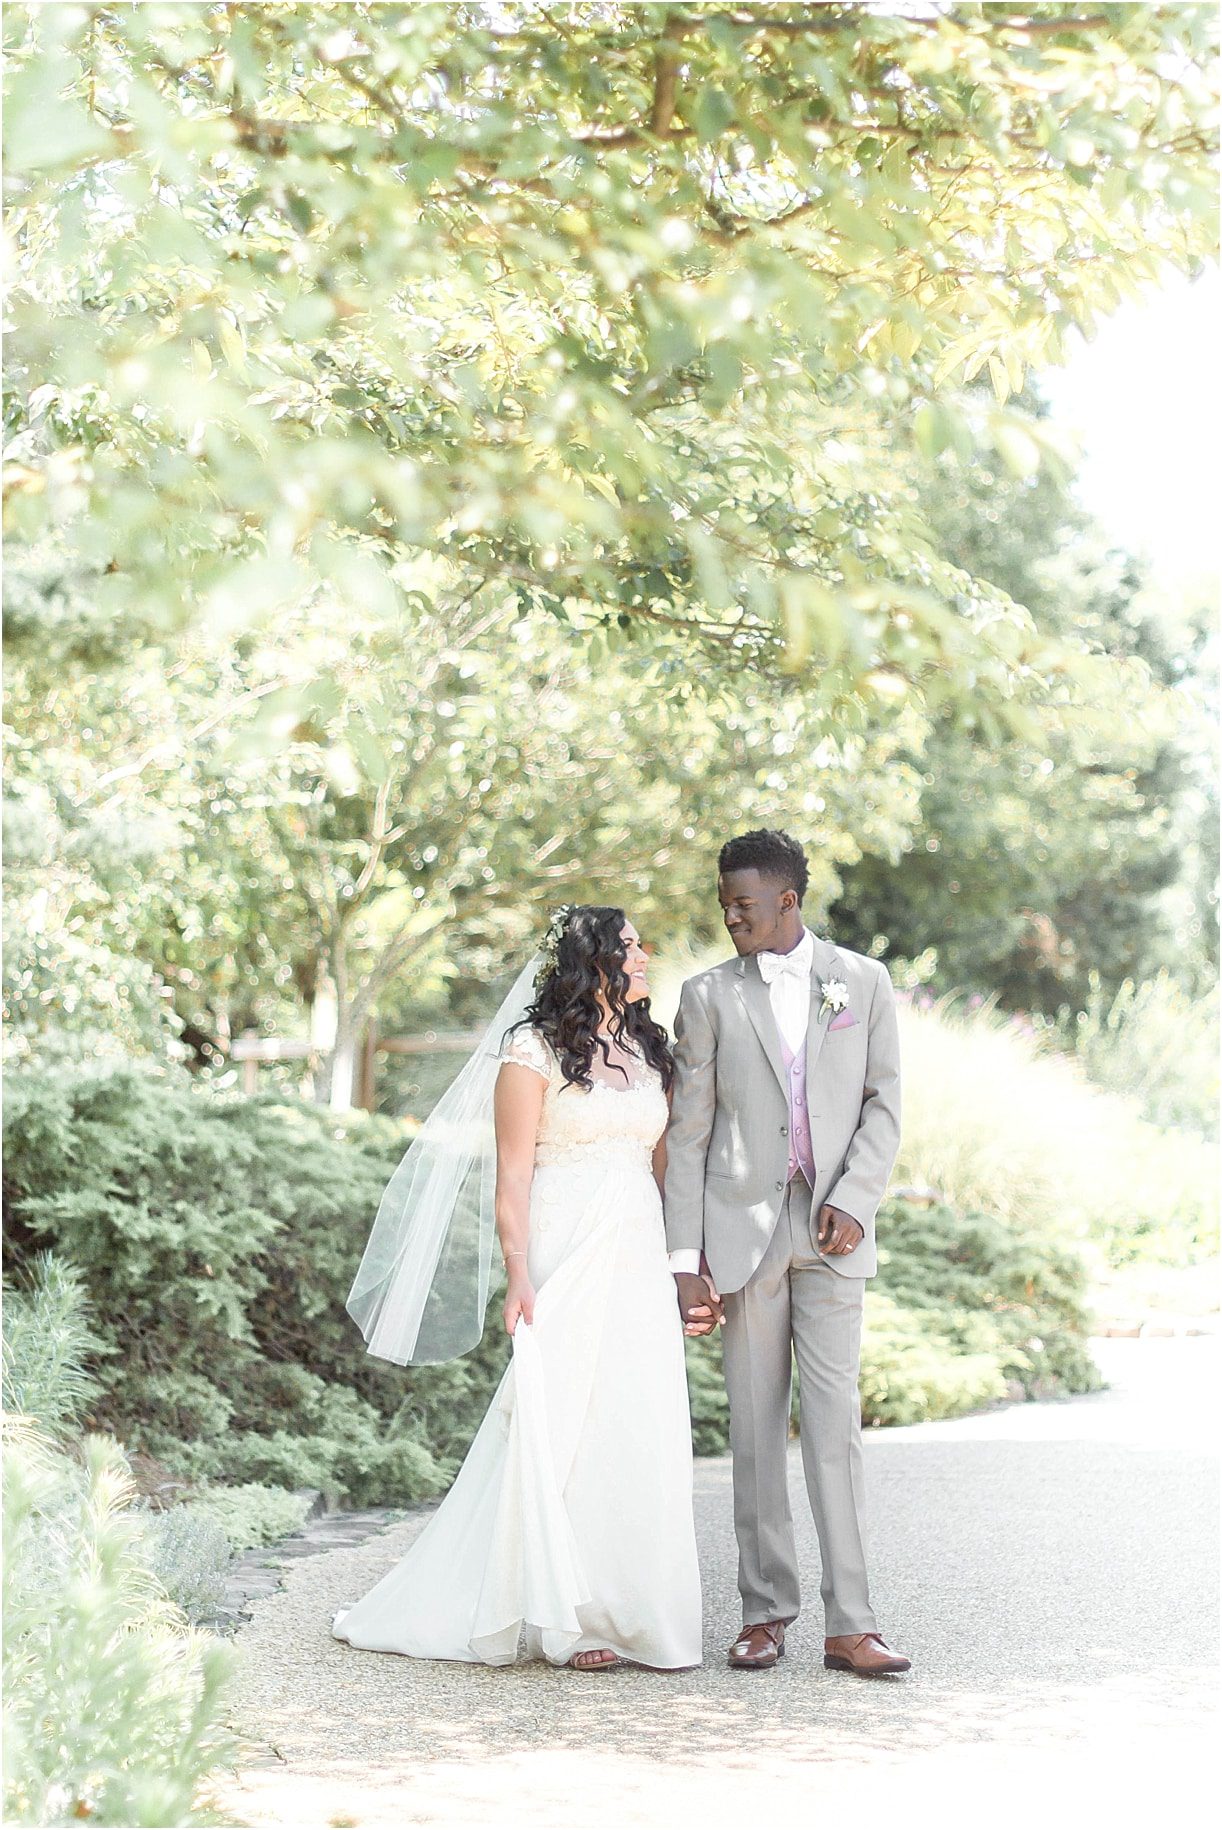 Interracial Lavender Richmond Virginia Wedding as seen on Hill City Bride Blog by Demi Mabry Photography newlyweds groom